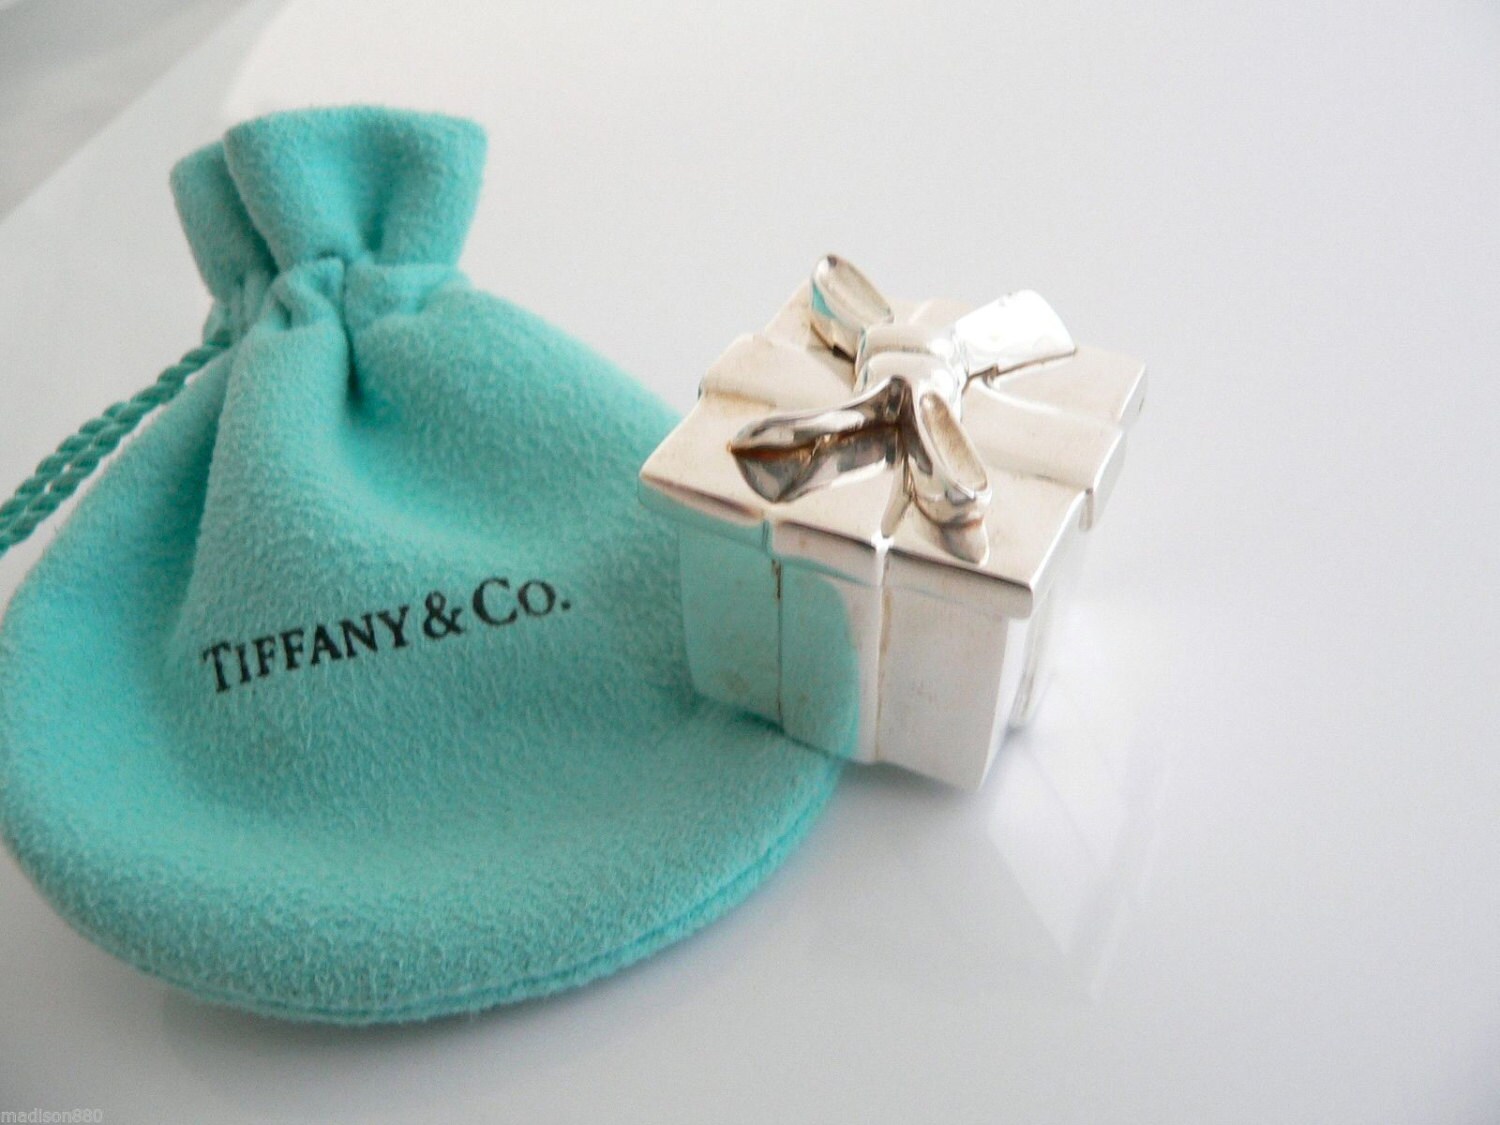 TIFFANY & CO. Jewelry Pouch + Booklet + Ribbon + Tissue + Box 3.20x3.2